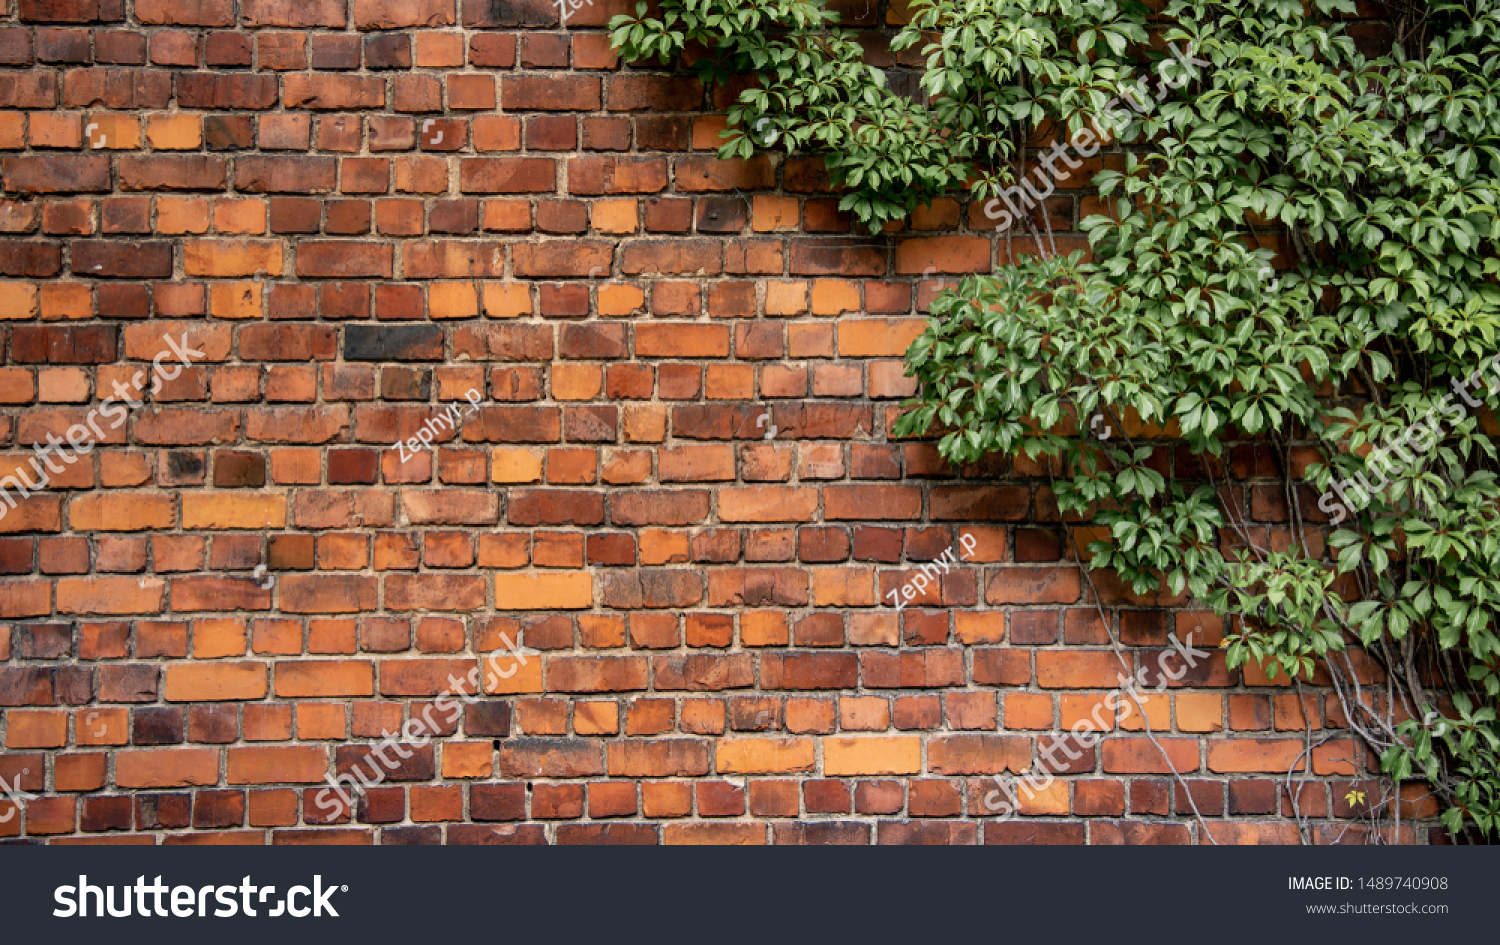 Leaf on brick wallpaper Images, Stock Photos & Vectors | Shutterstock